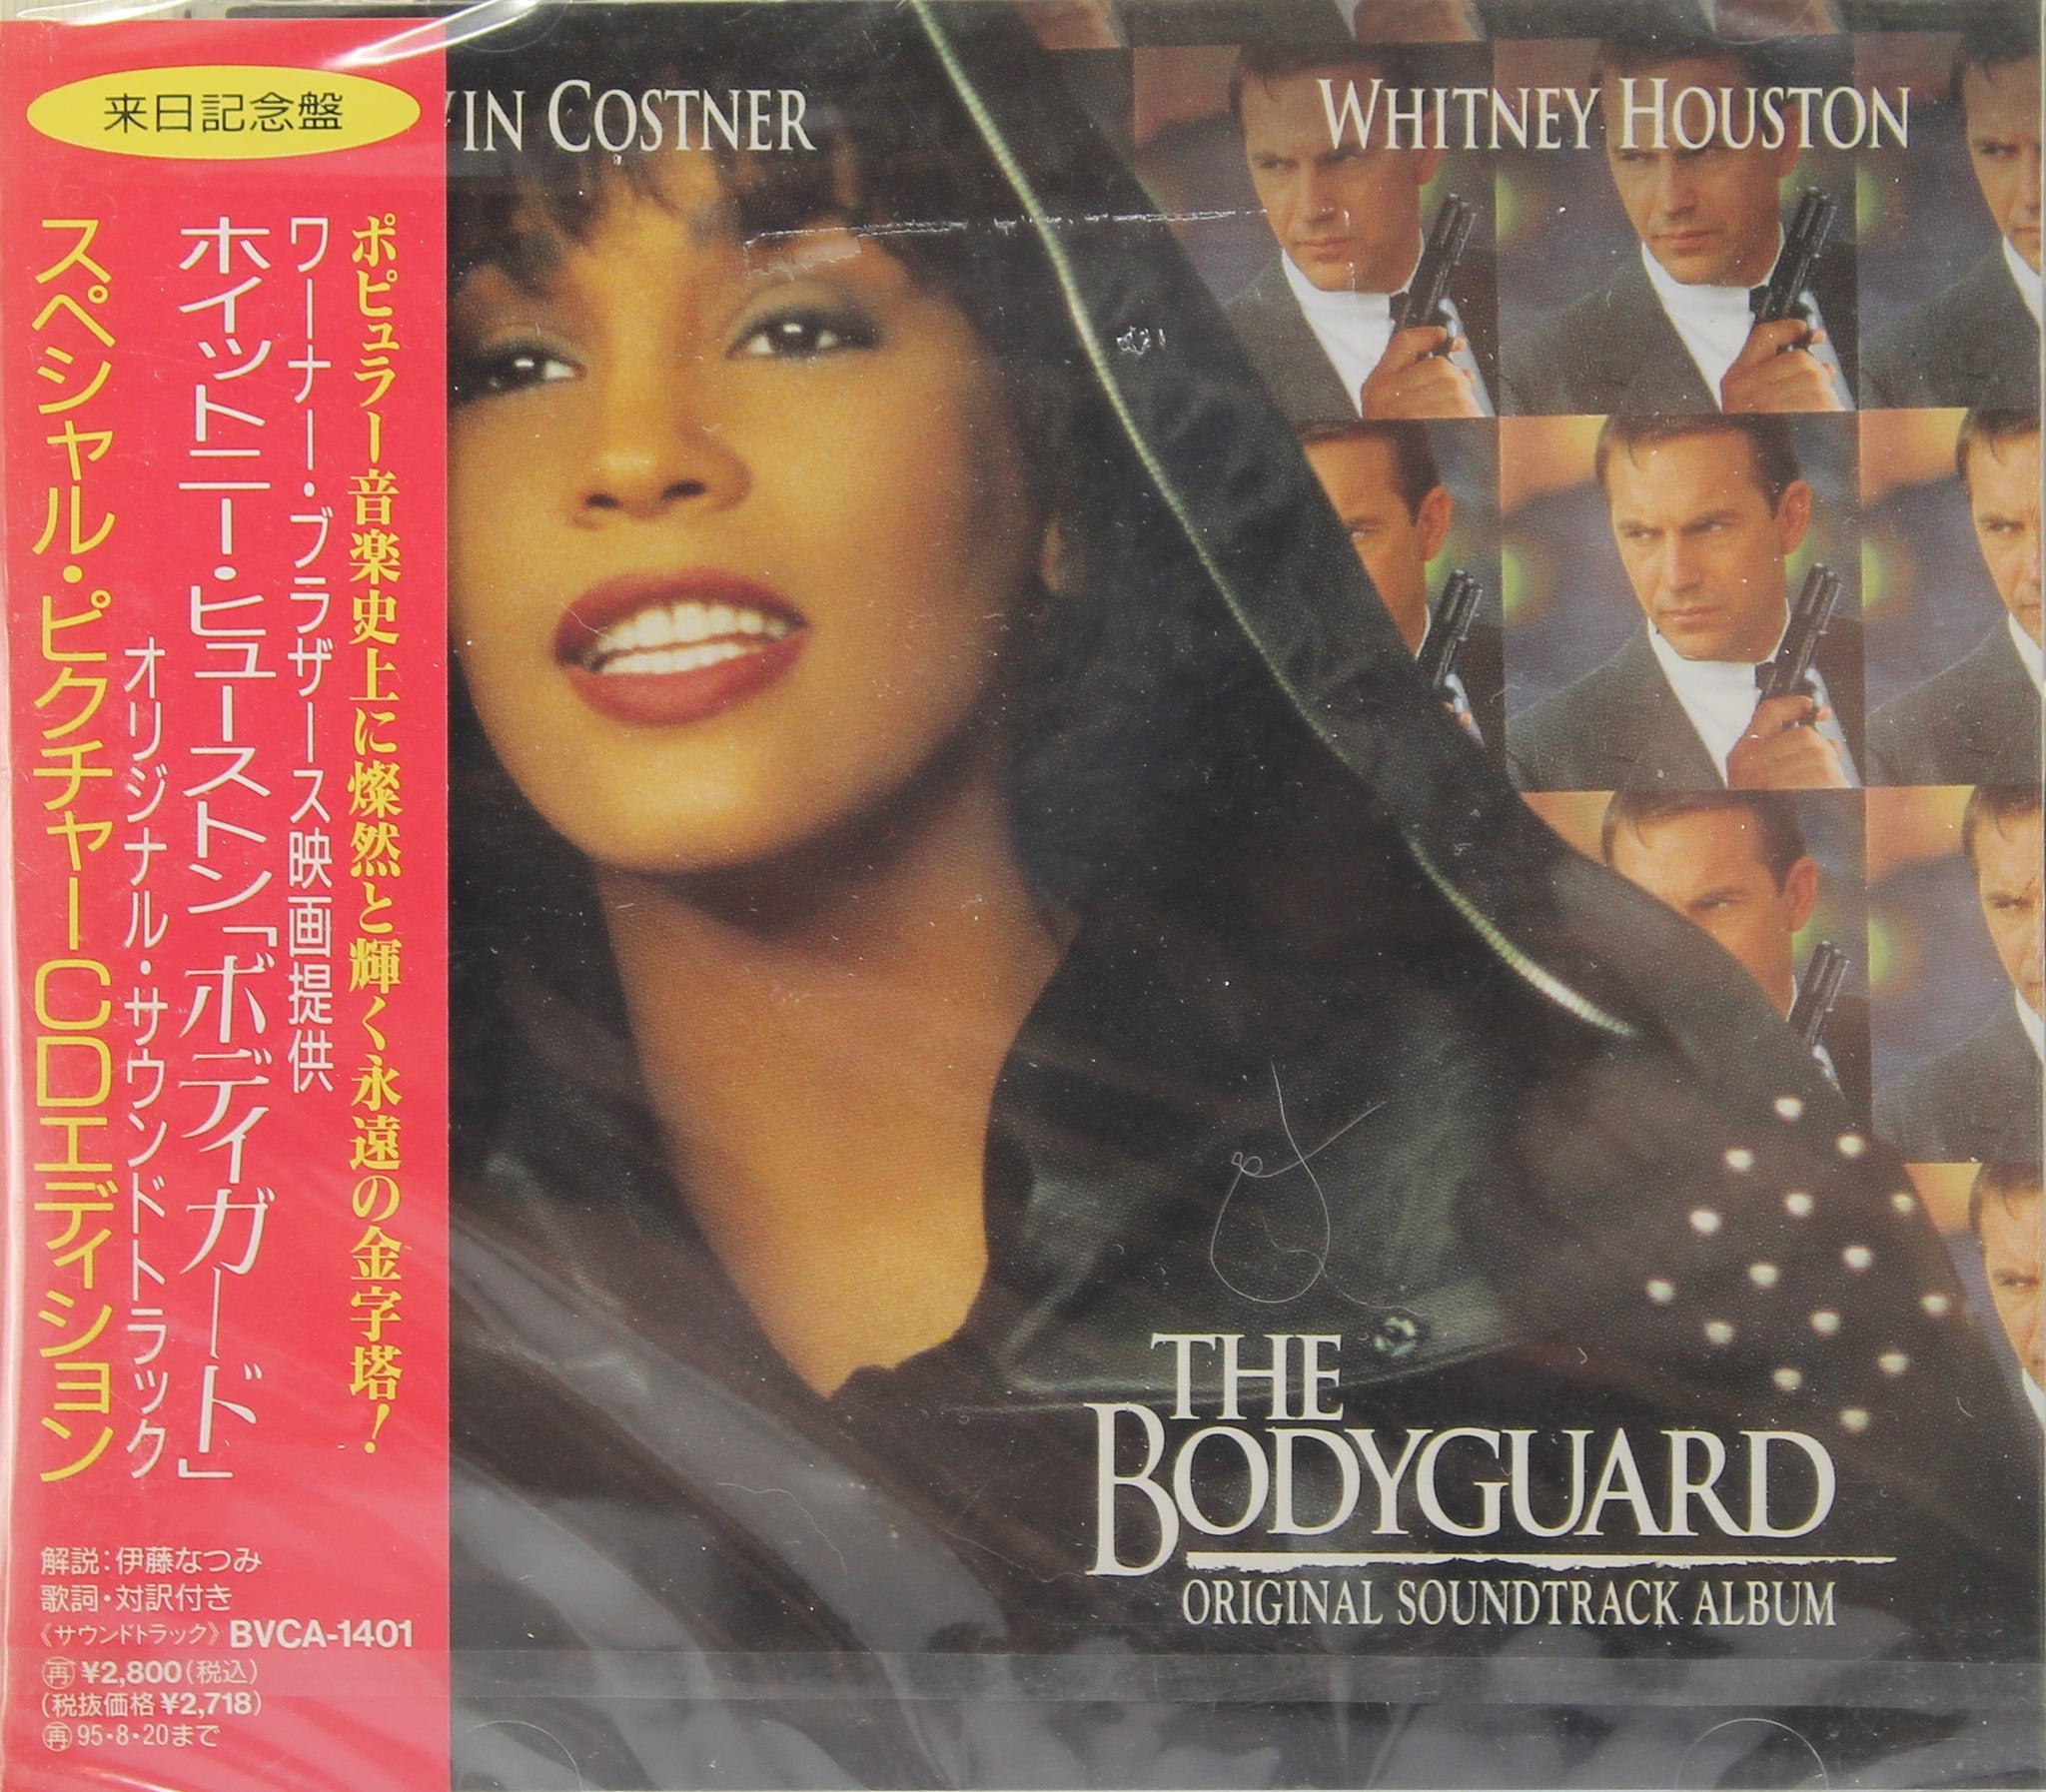 Whitney HoustonボディガードCD - 洋楽